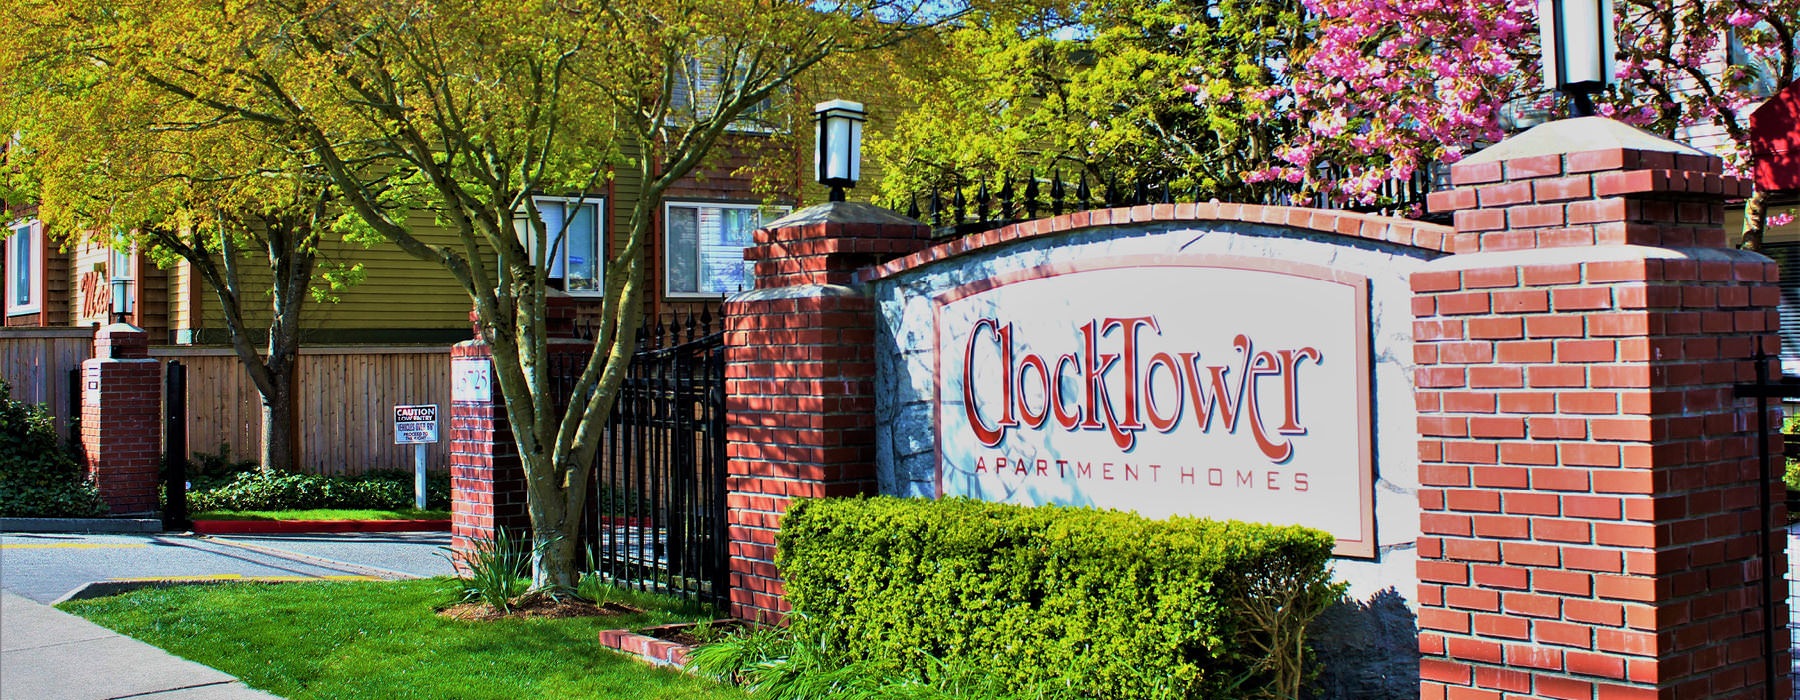 red brick Clocktower sign at property entrance